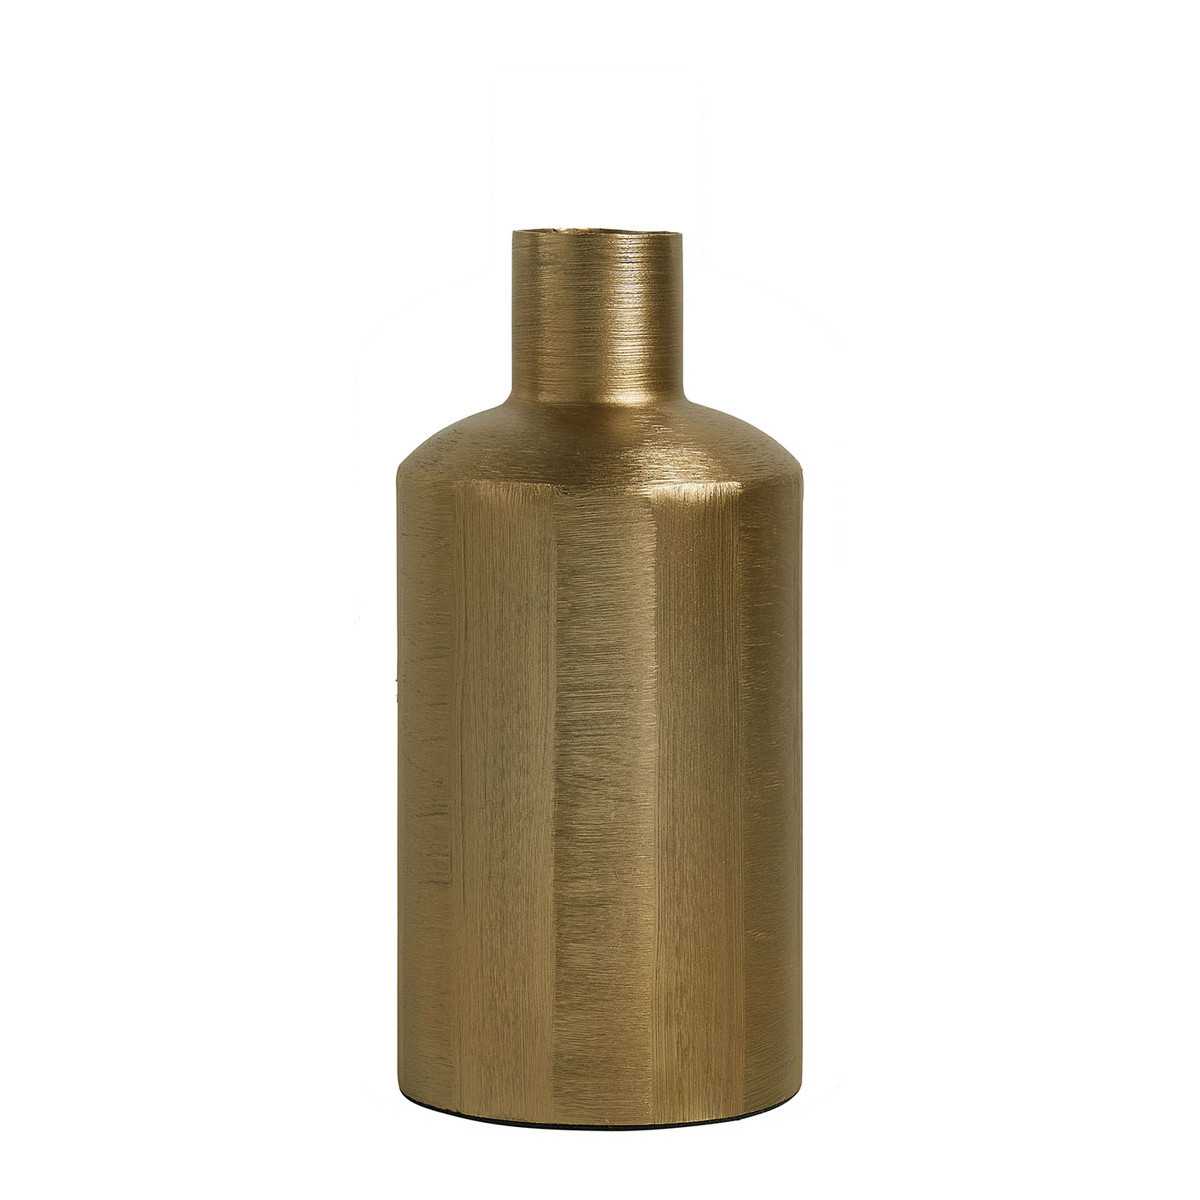 ELIAS Vase aus vergoldetem Metall - Mittleres Modell - H. 28 cm